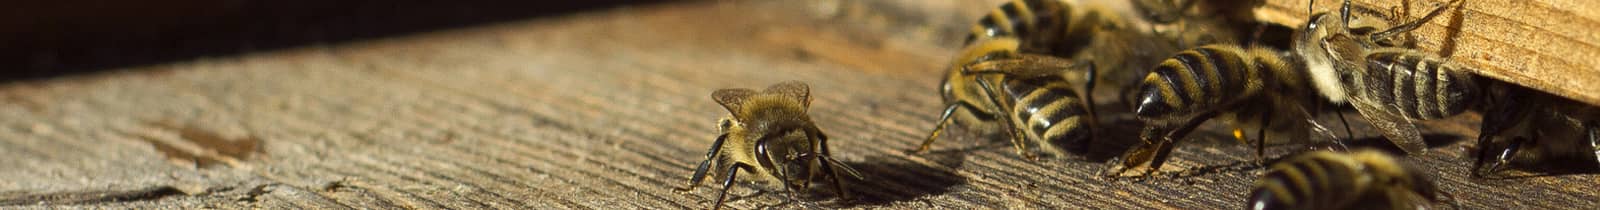 hornet and bee pest control company nashville, tn